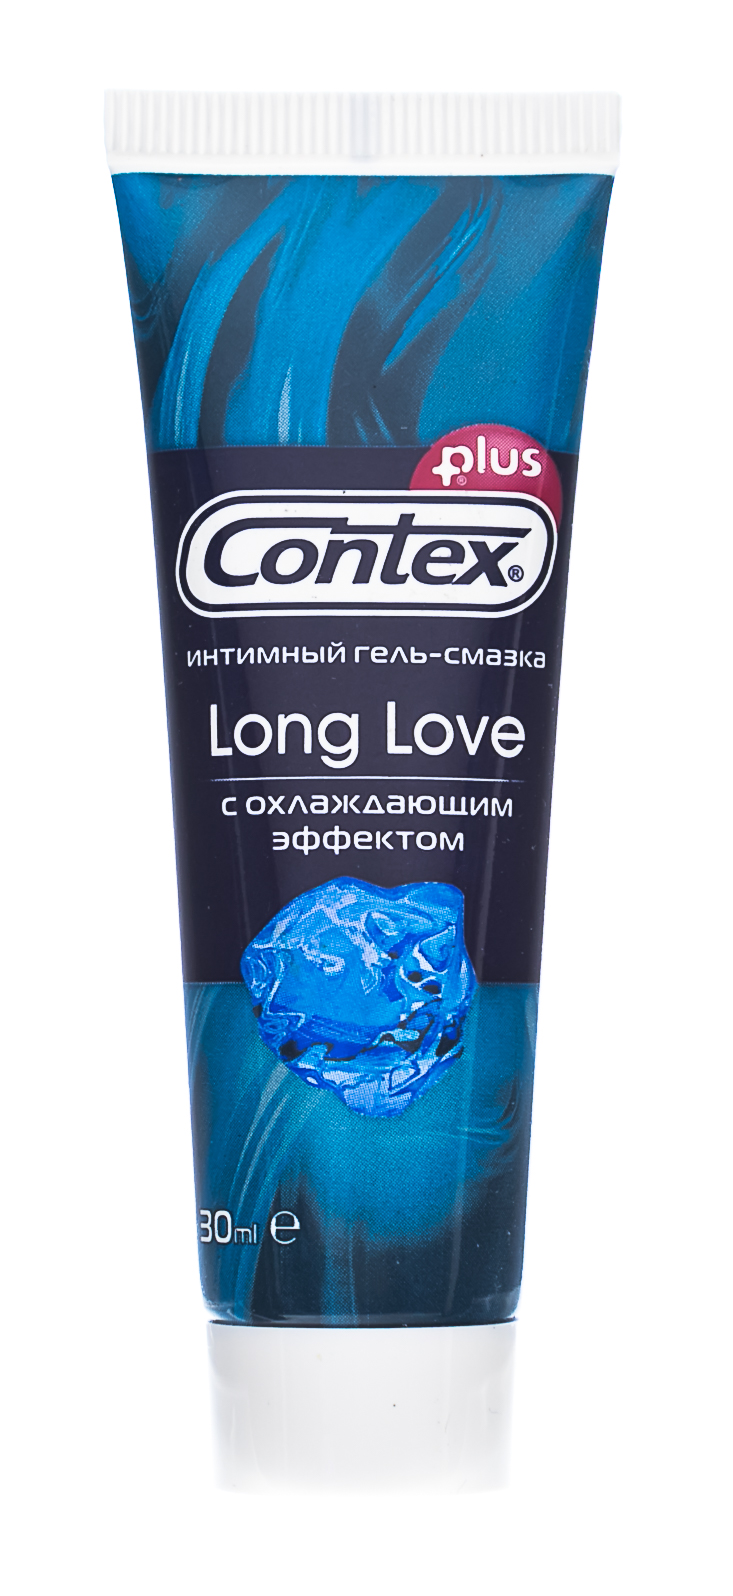 Contex Гель-смазка Long Love продлевающий акт 30 мл (Contex, Гель-смазка)